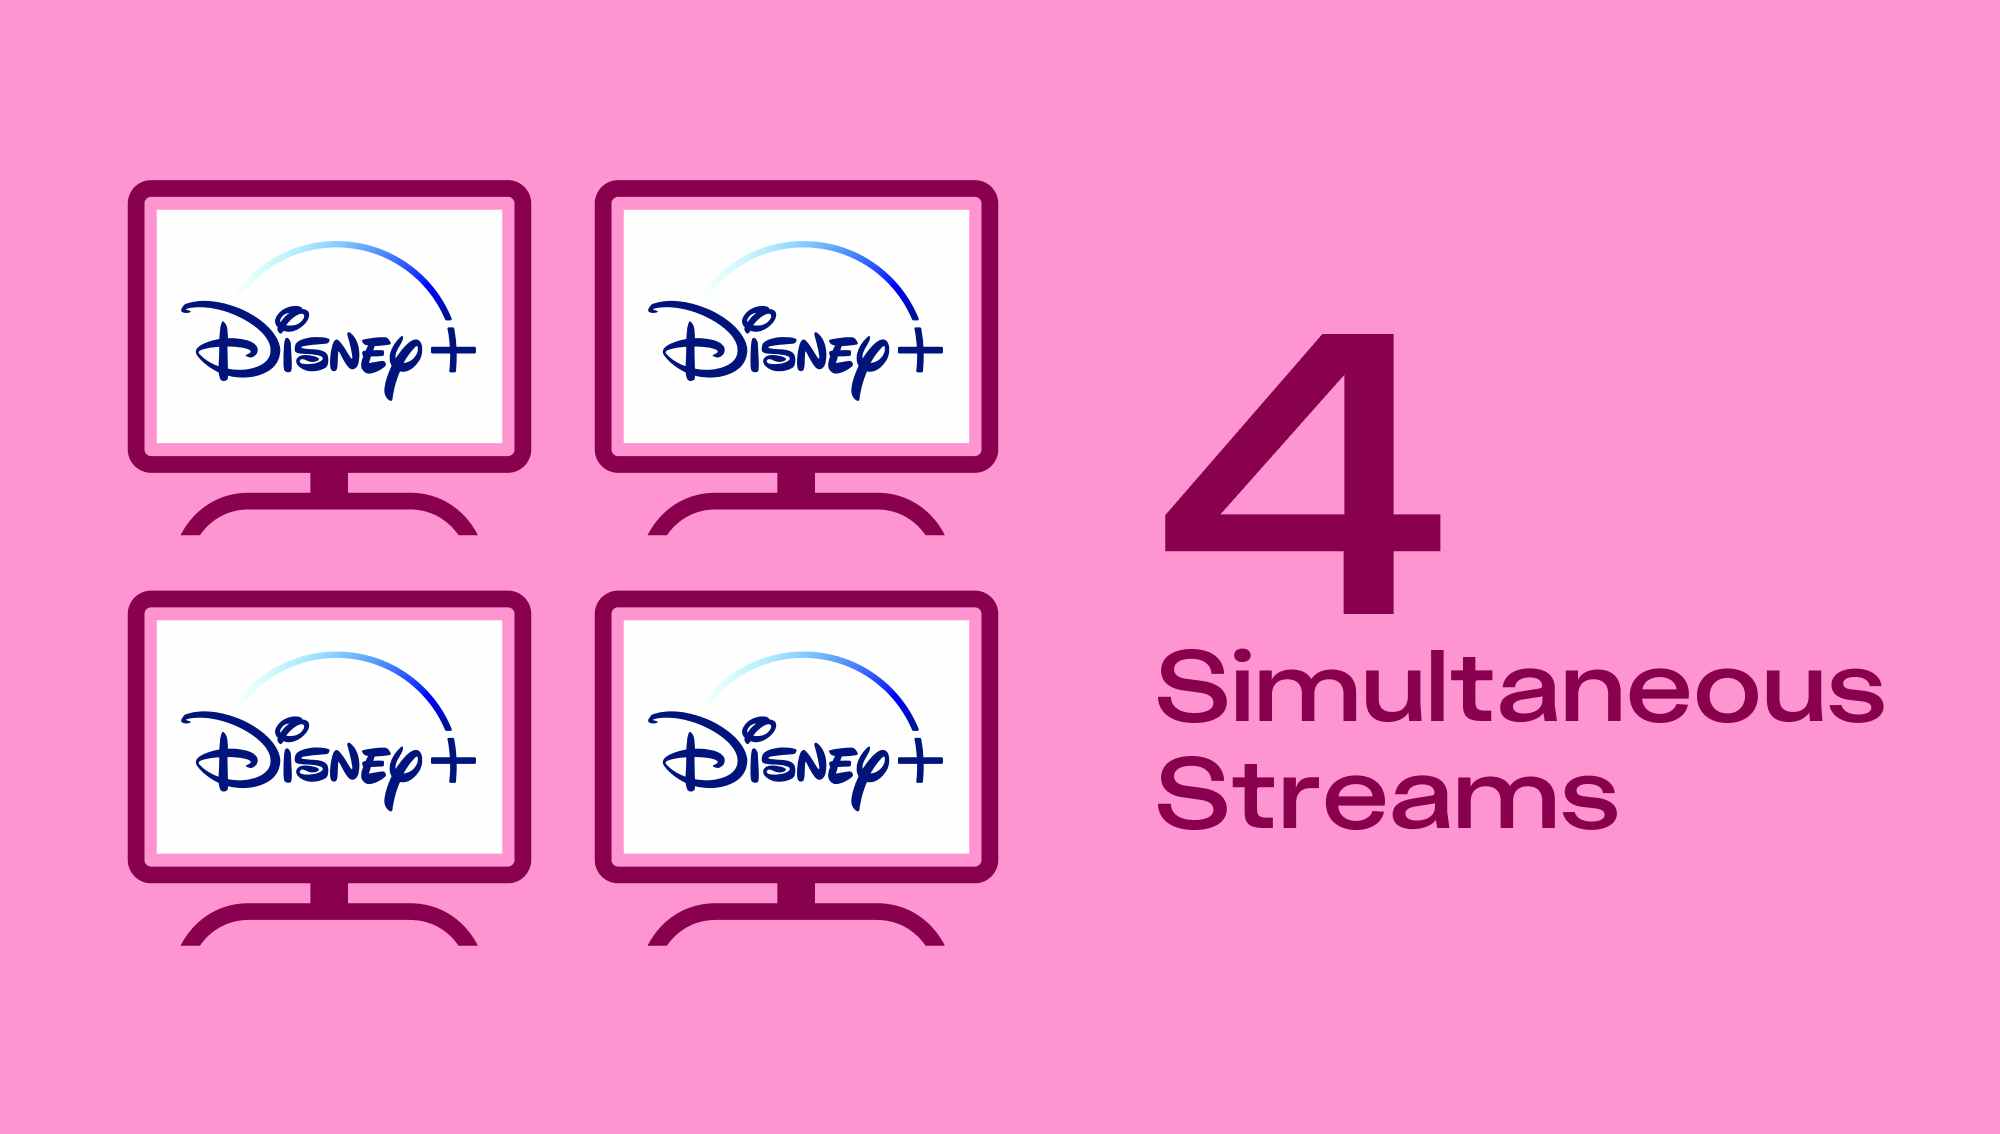 Disney Plus lets four screens stream simultaneously